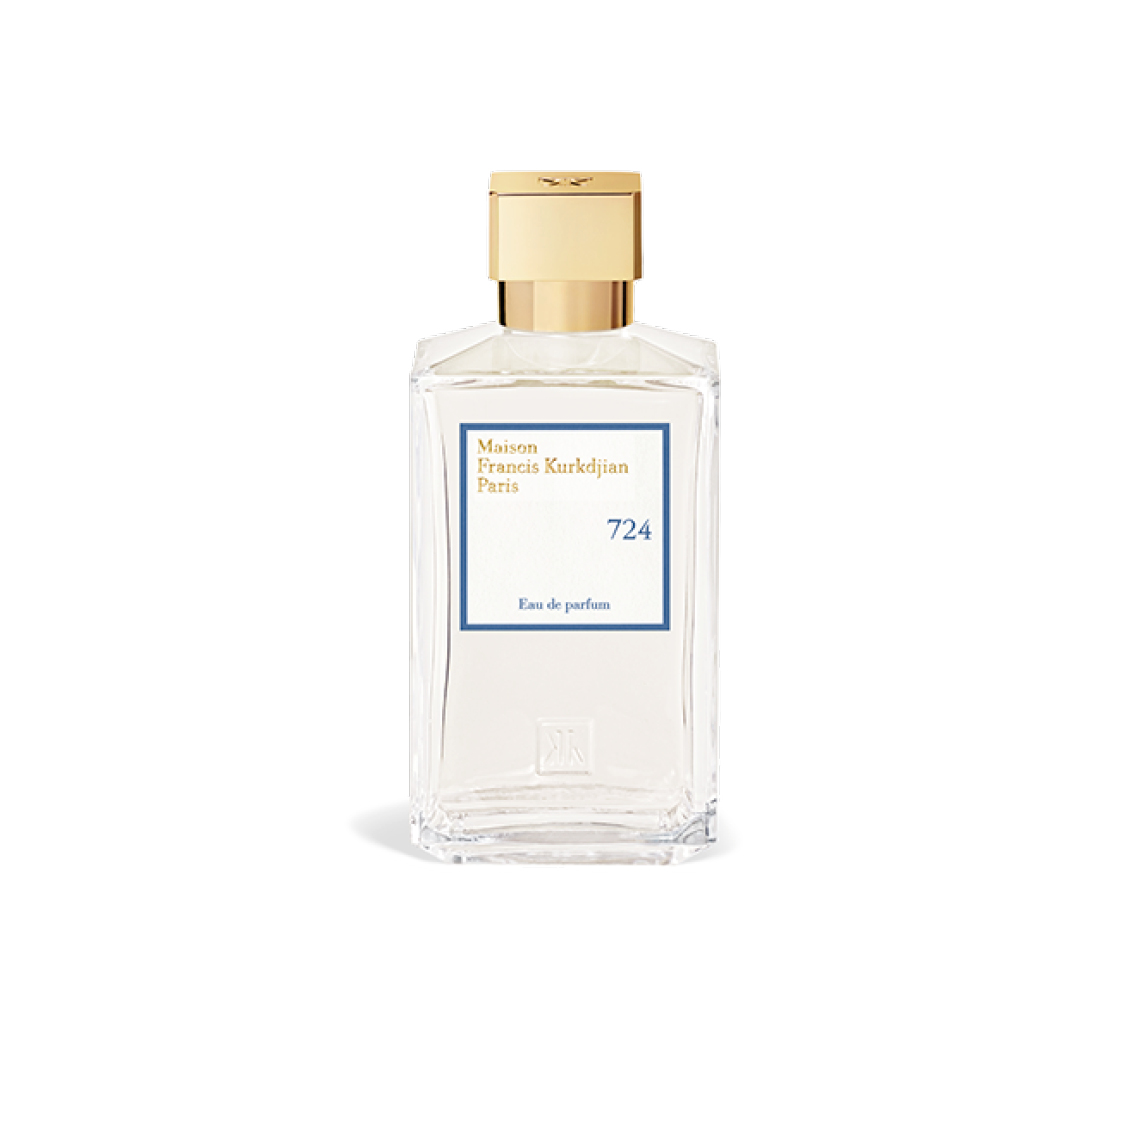 Aroma Segar dari Parfum Teranyar Louis Vuitton, California Dream - Elle  Indonesia